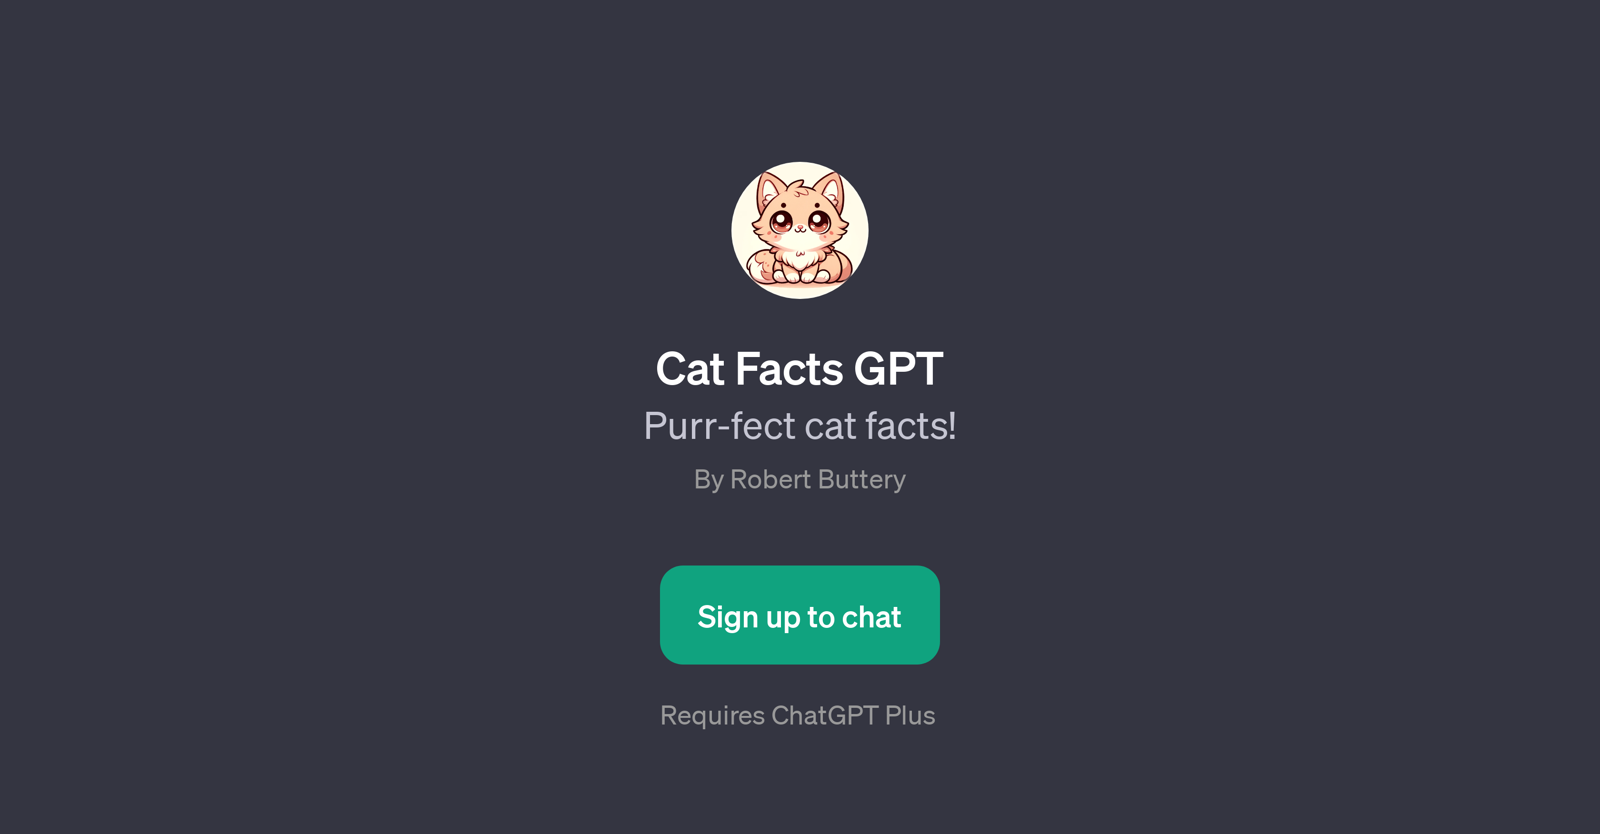 Cat Facts GPT website